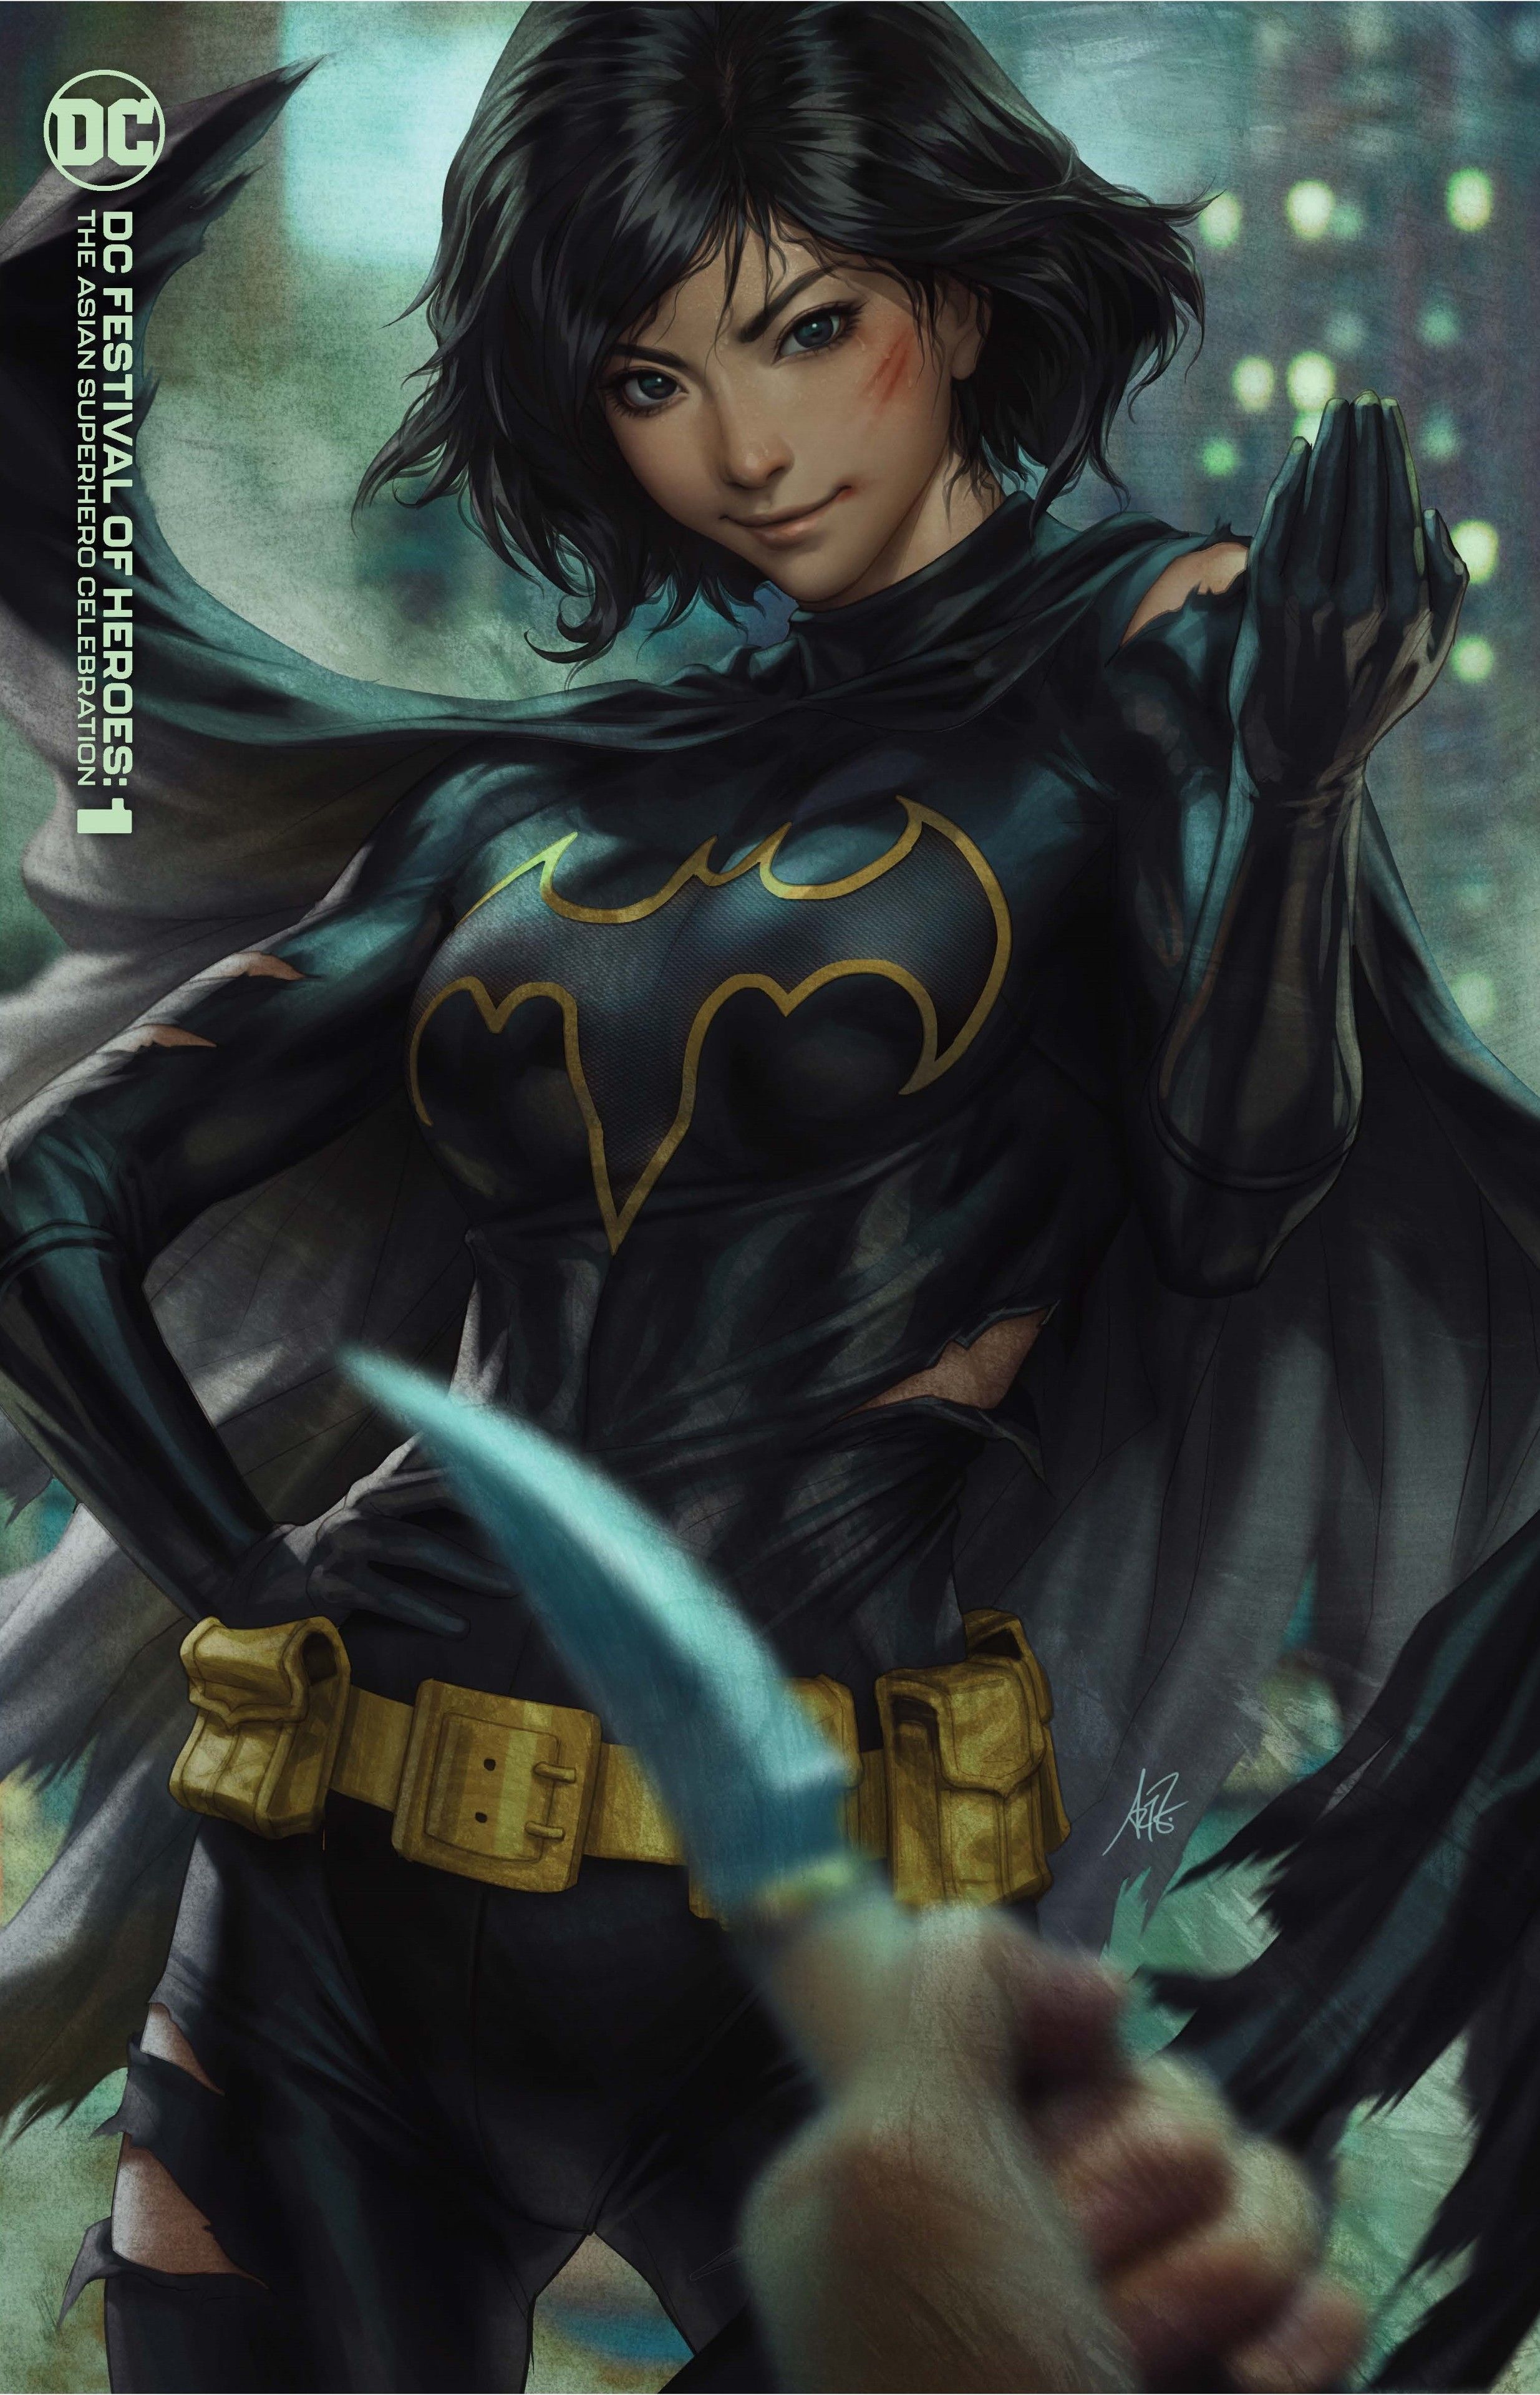 Cassandra Cain Batgirl Gets Stunning Cover Art Ahead Of New Stories Informone